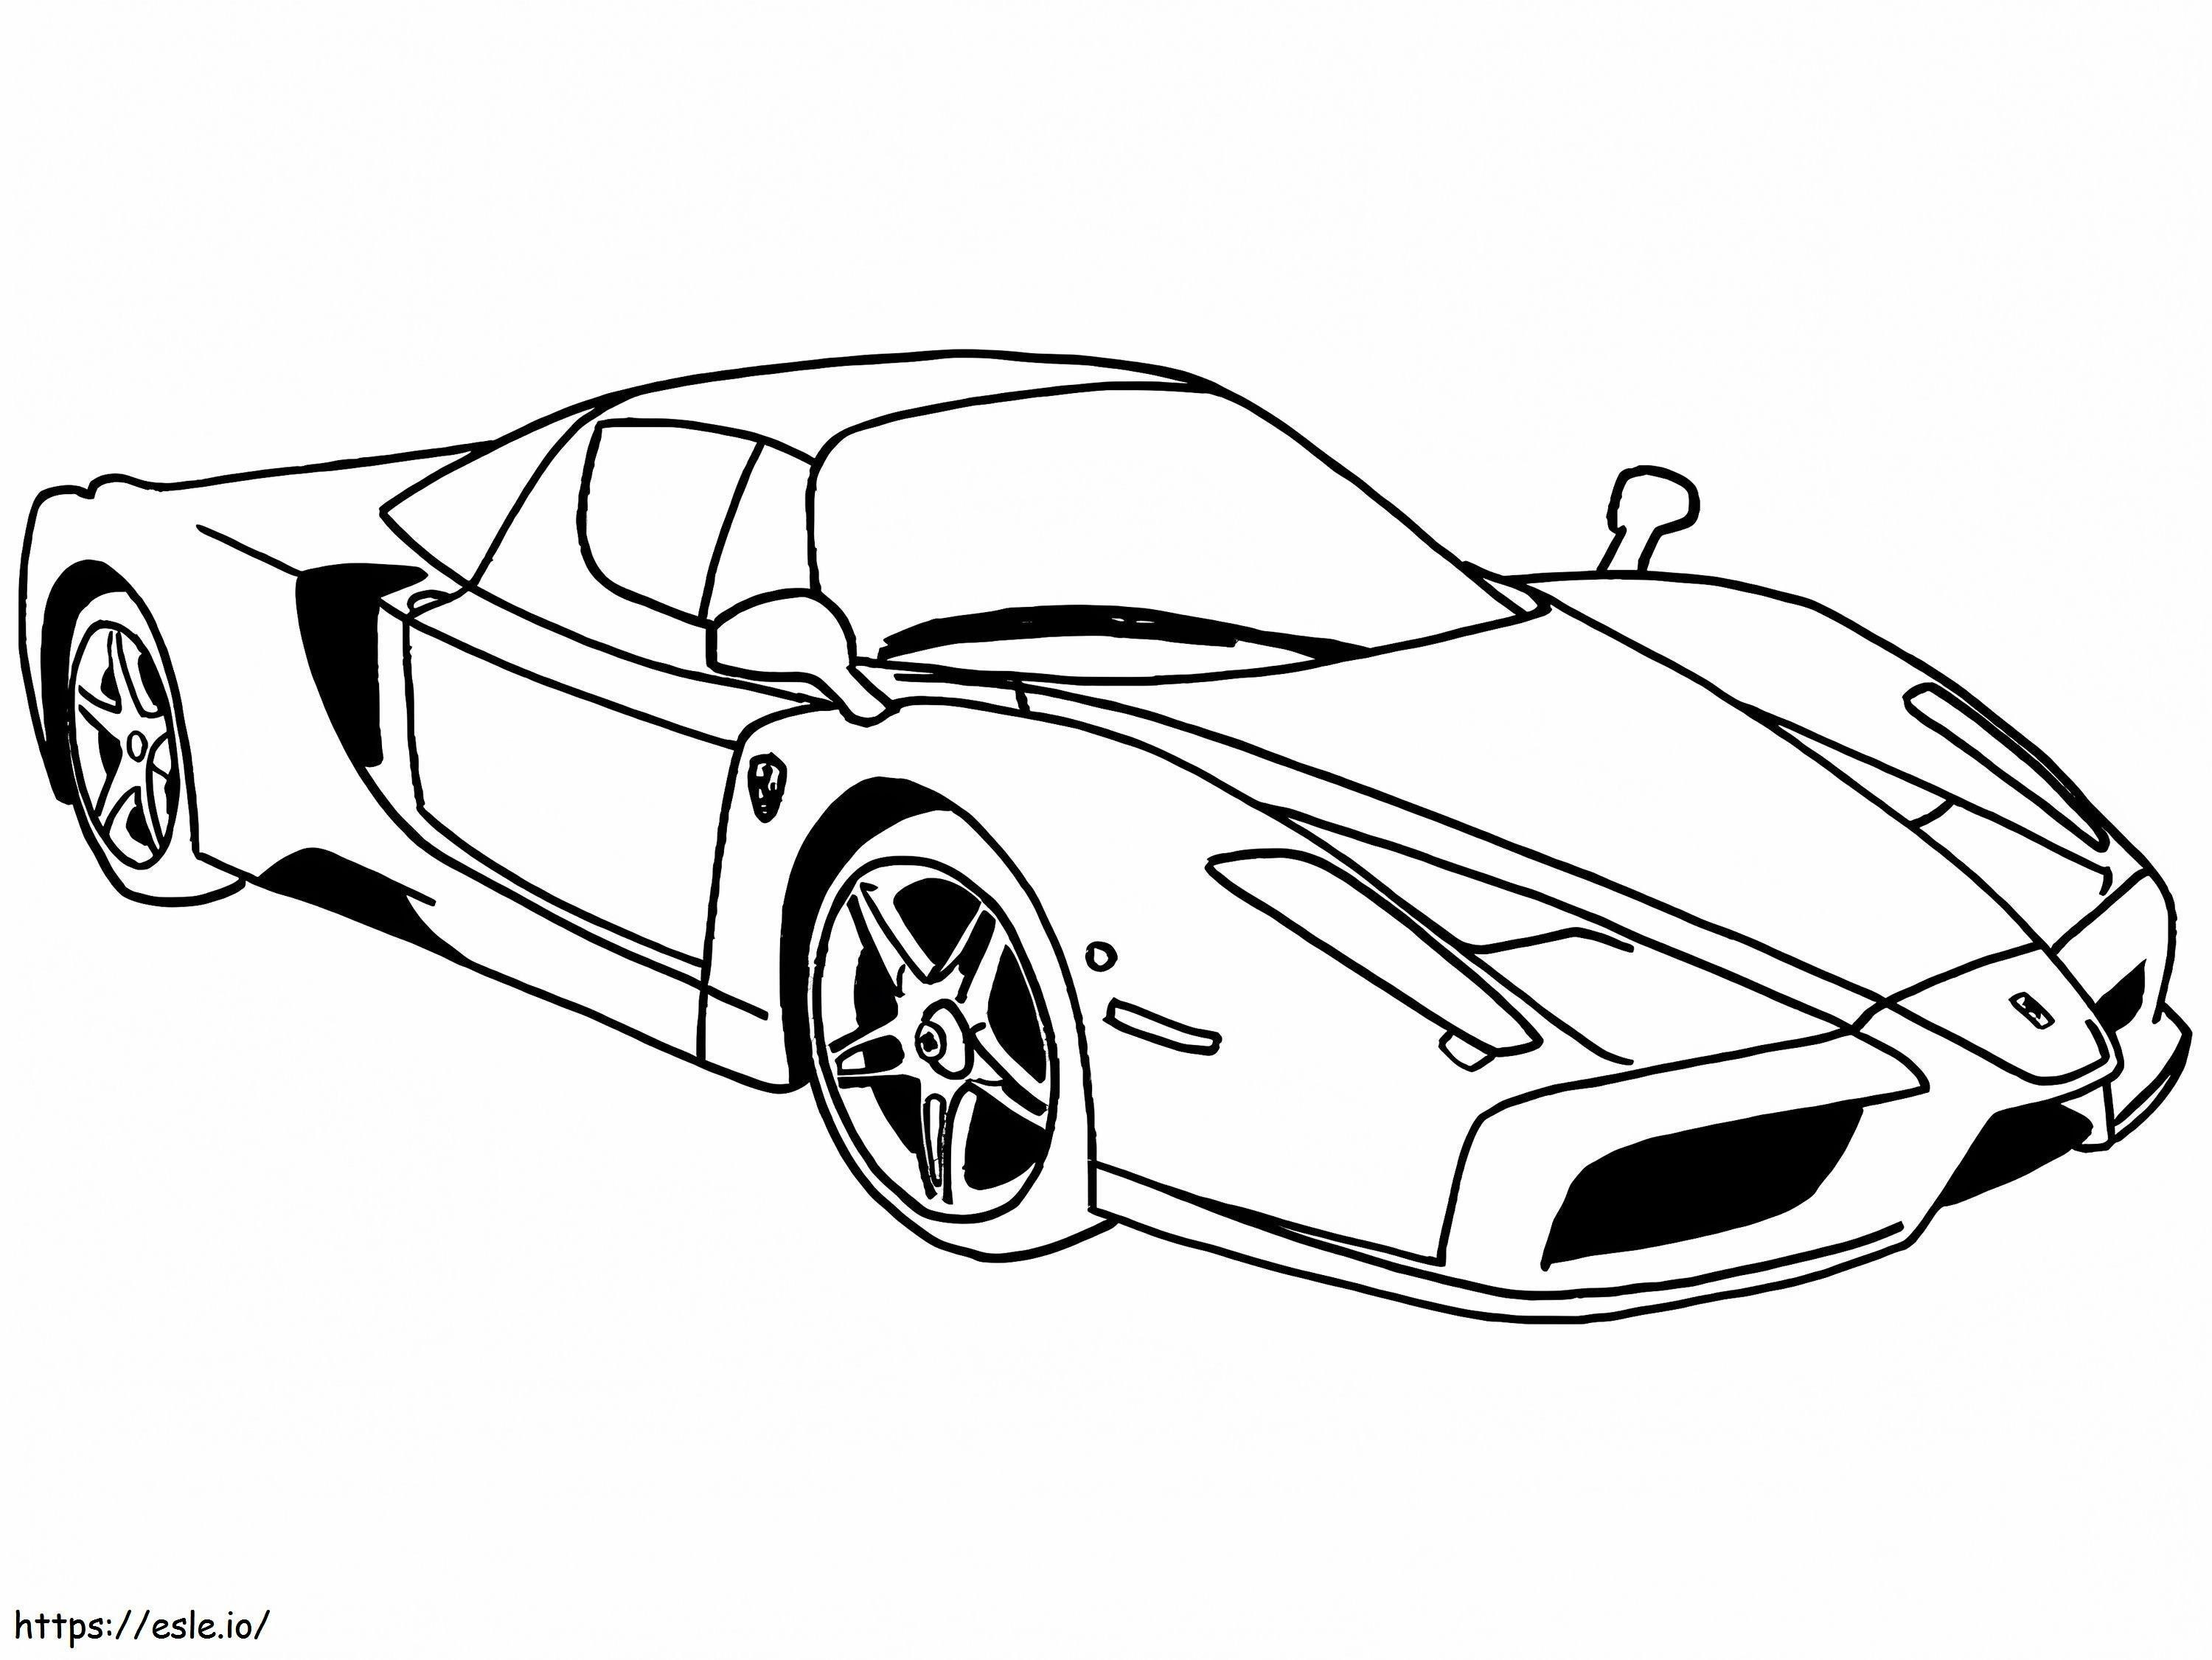 Ferrari Enzo coloring page